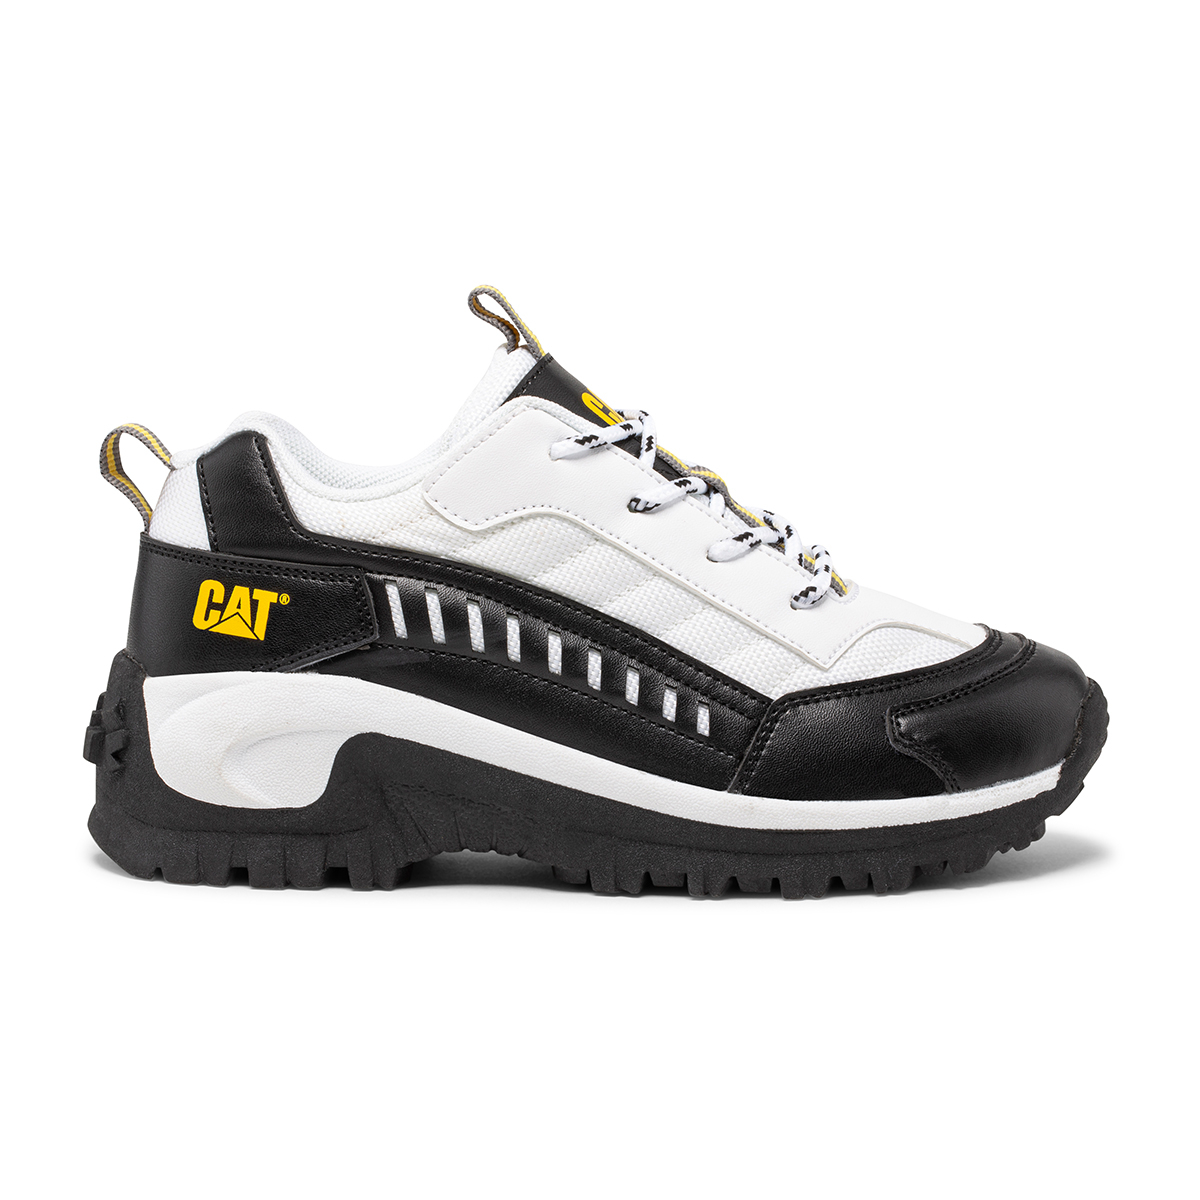 White/Black Caterpillar Intruder Kids' Sneakers | Cat-643058